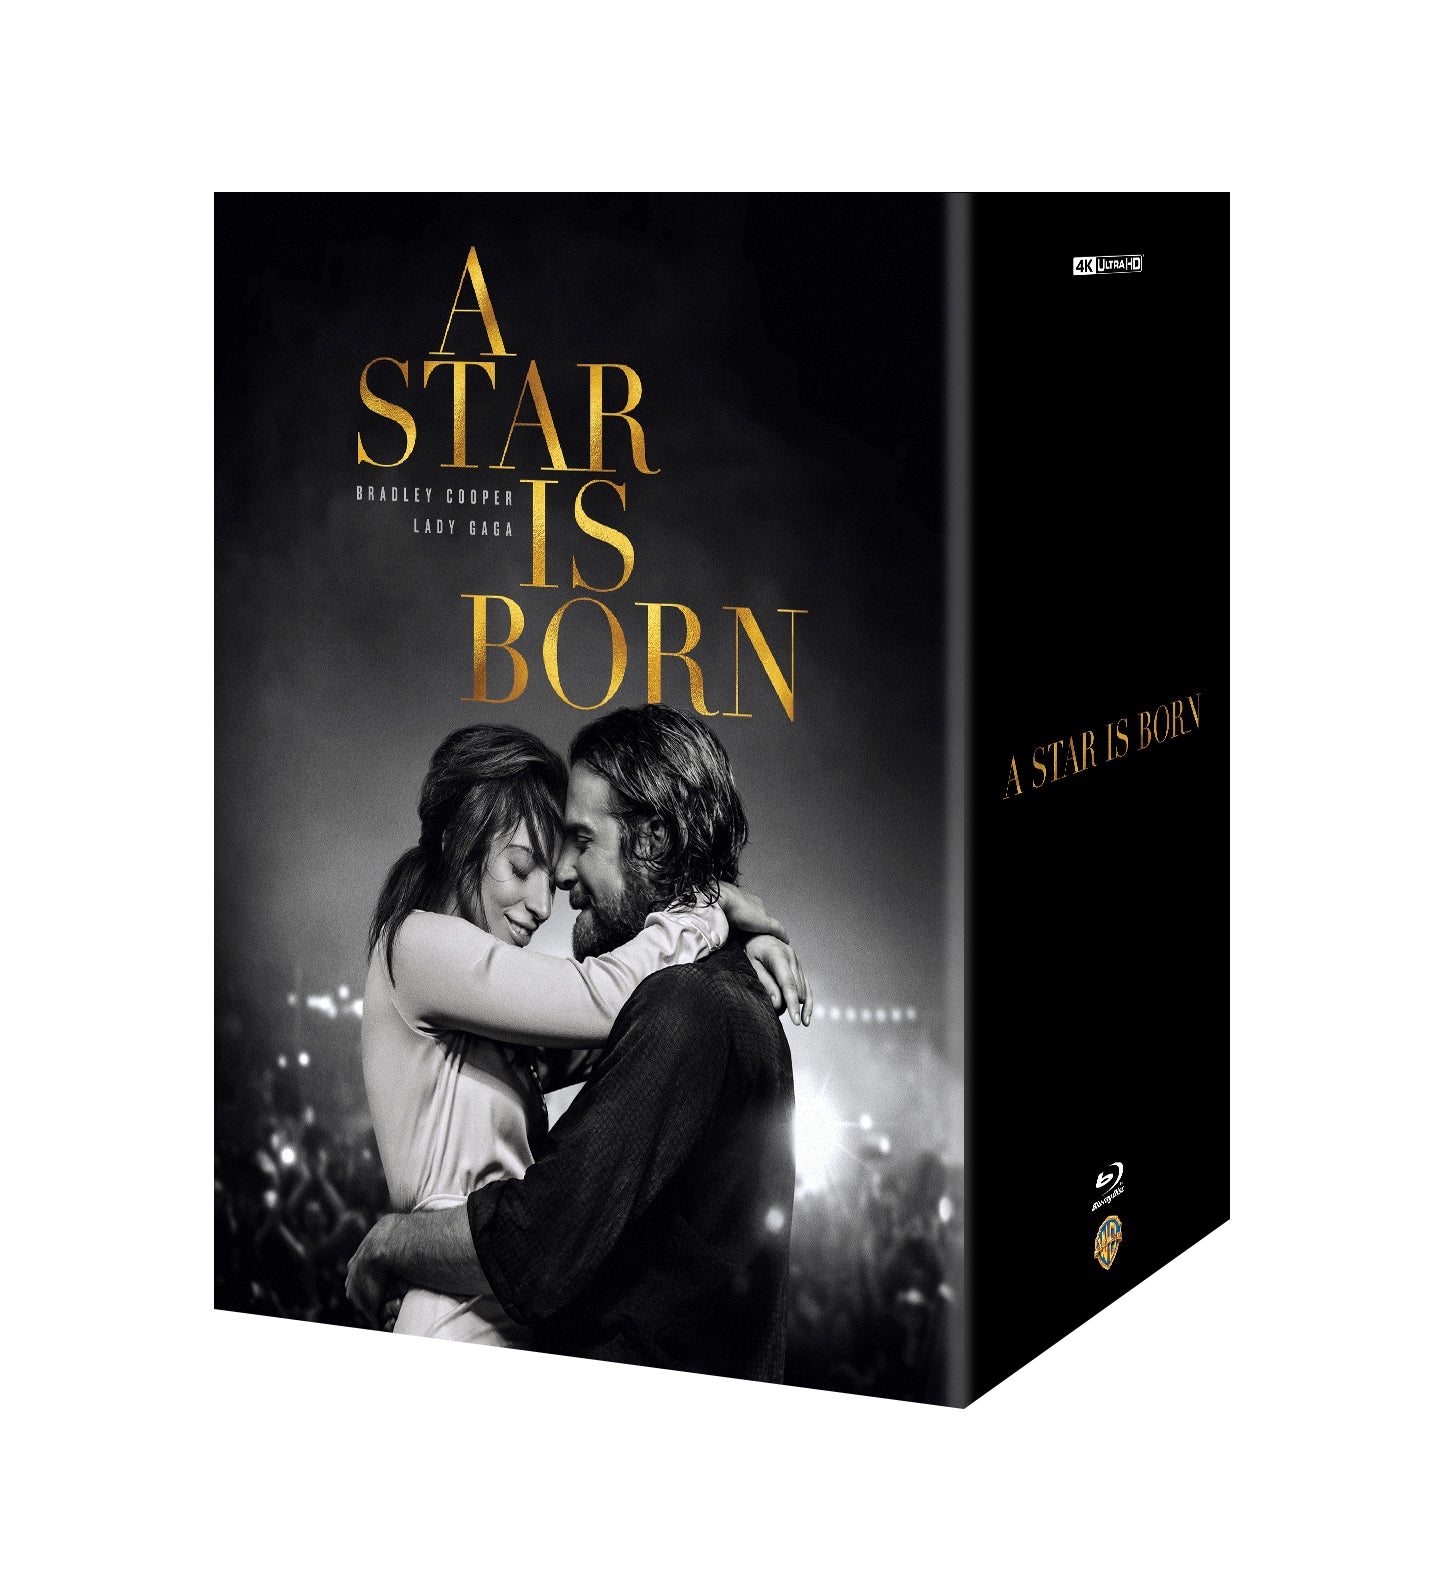 A Star Is Born [SteelBook] [Includes Digital Copy] [Blu-ray/DVD] [Only @  Best Buy] [2018] - Best Buy